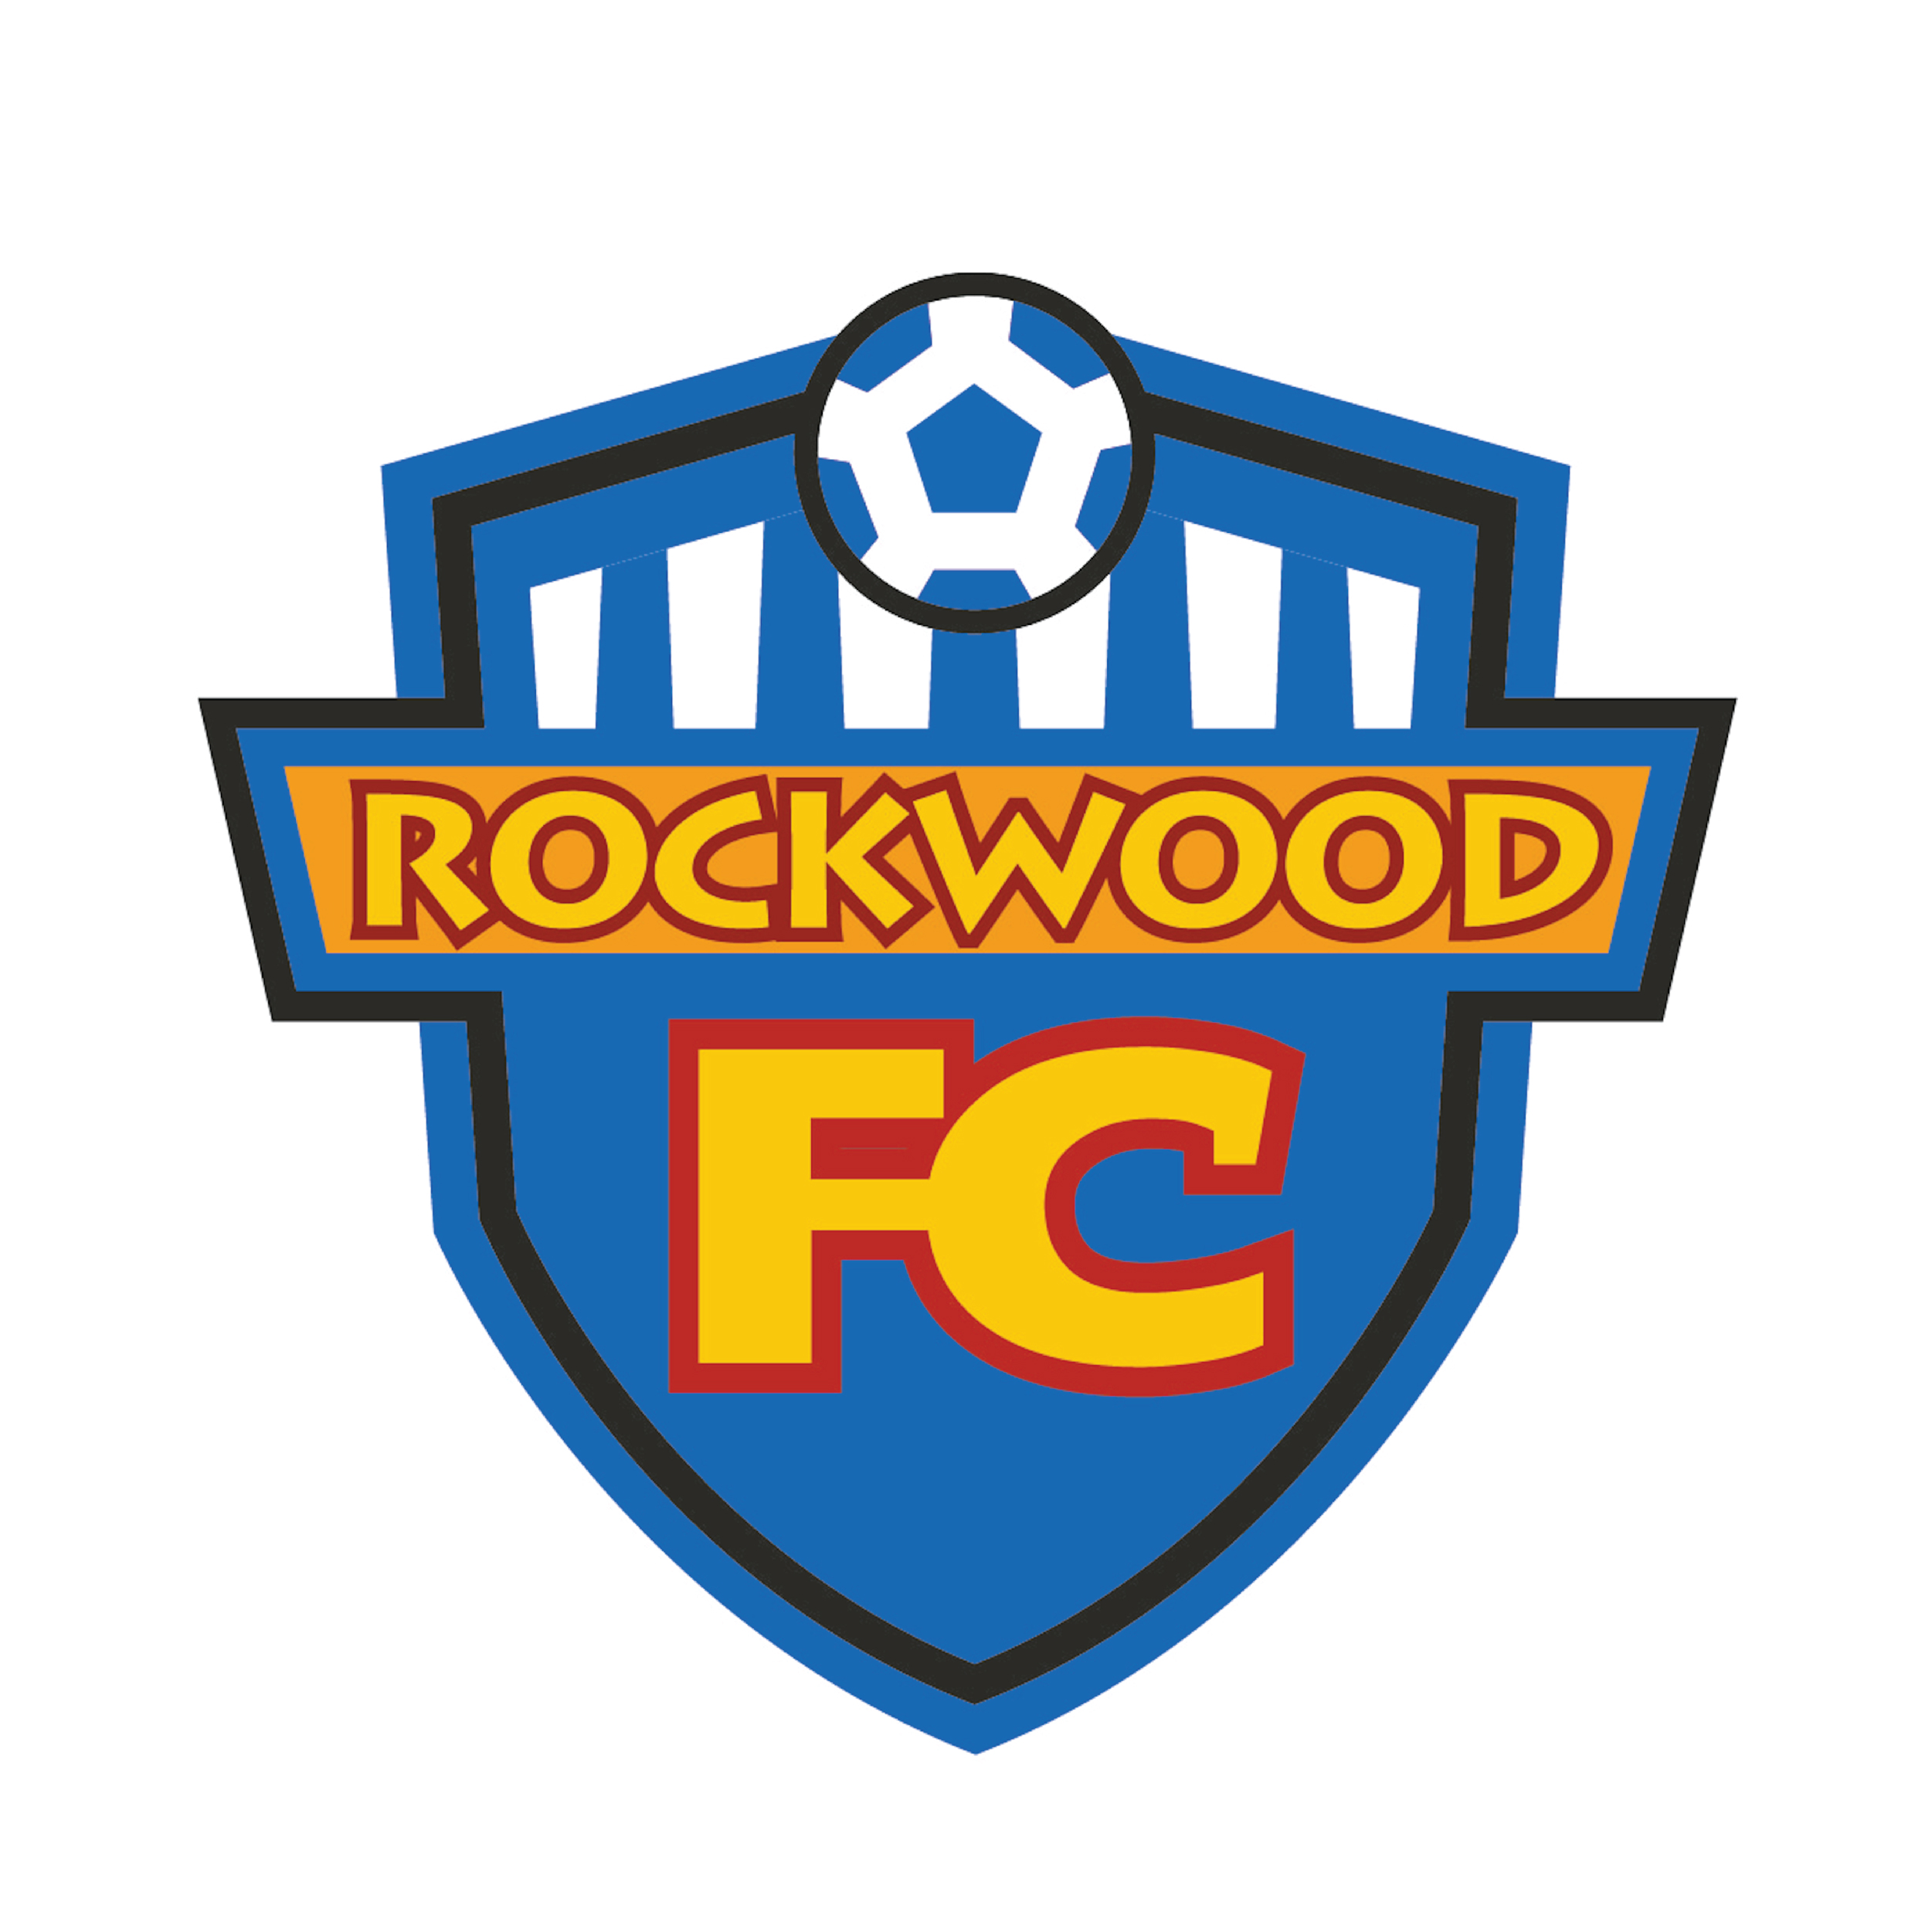 Rockwood Football Club